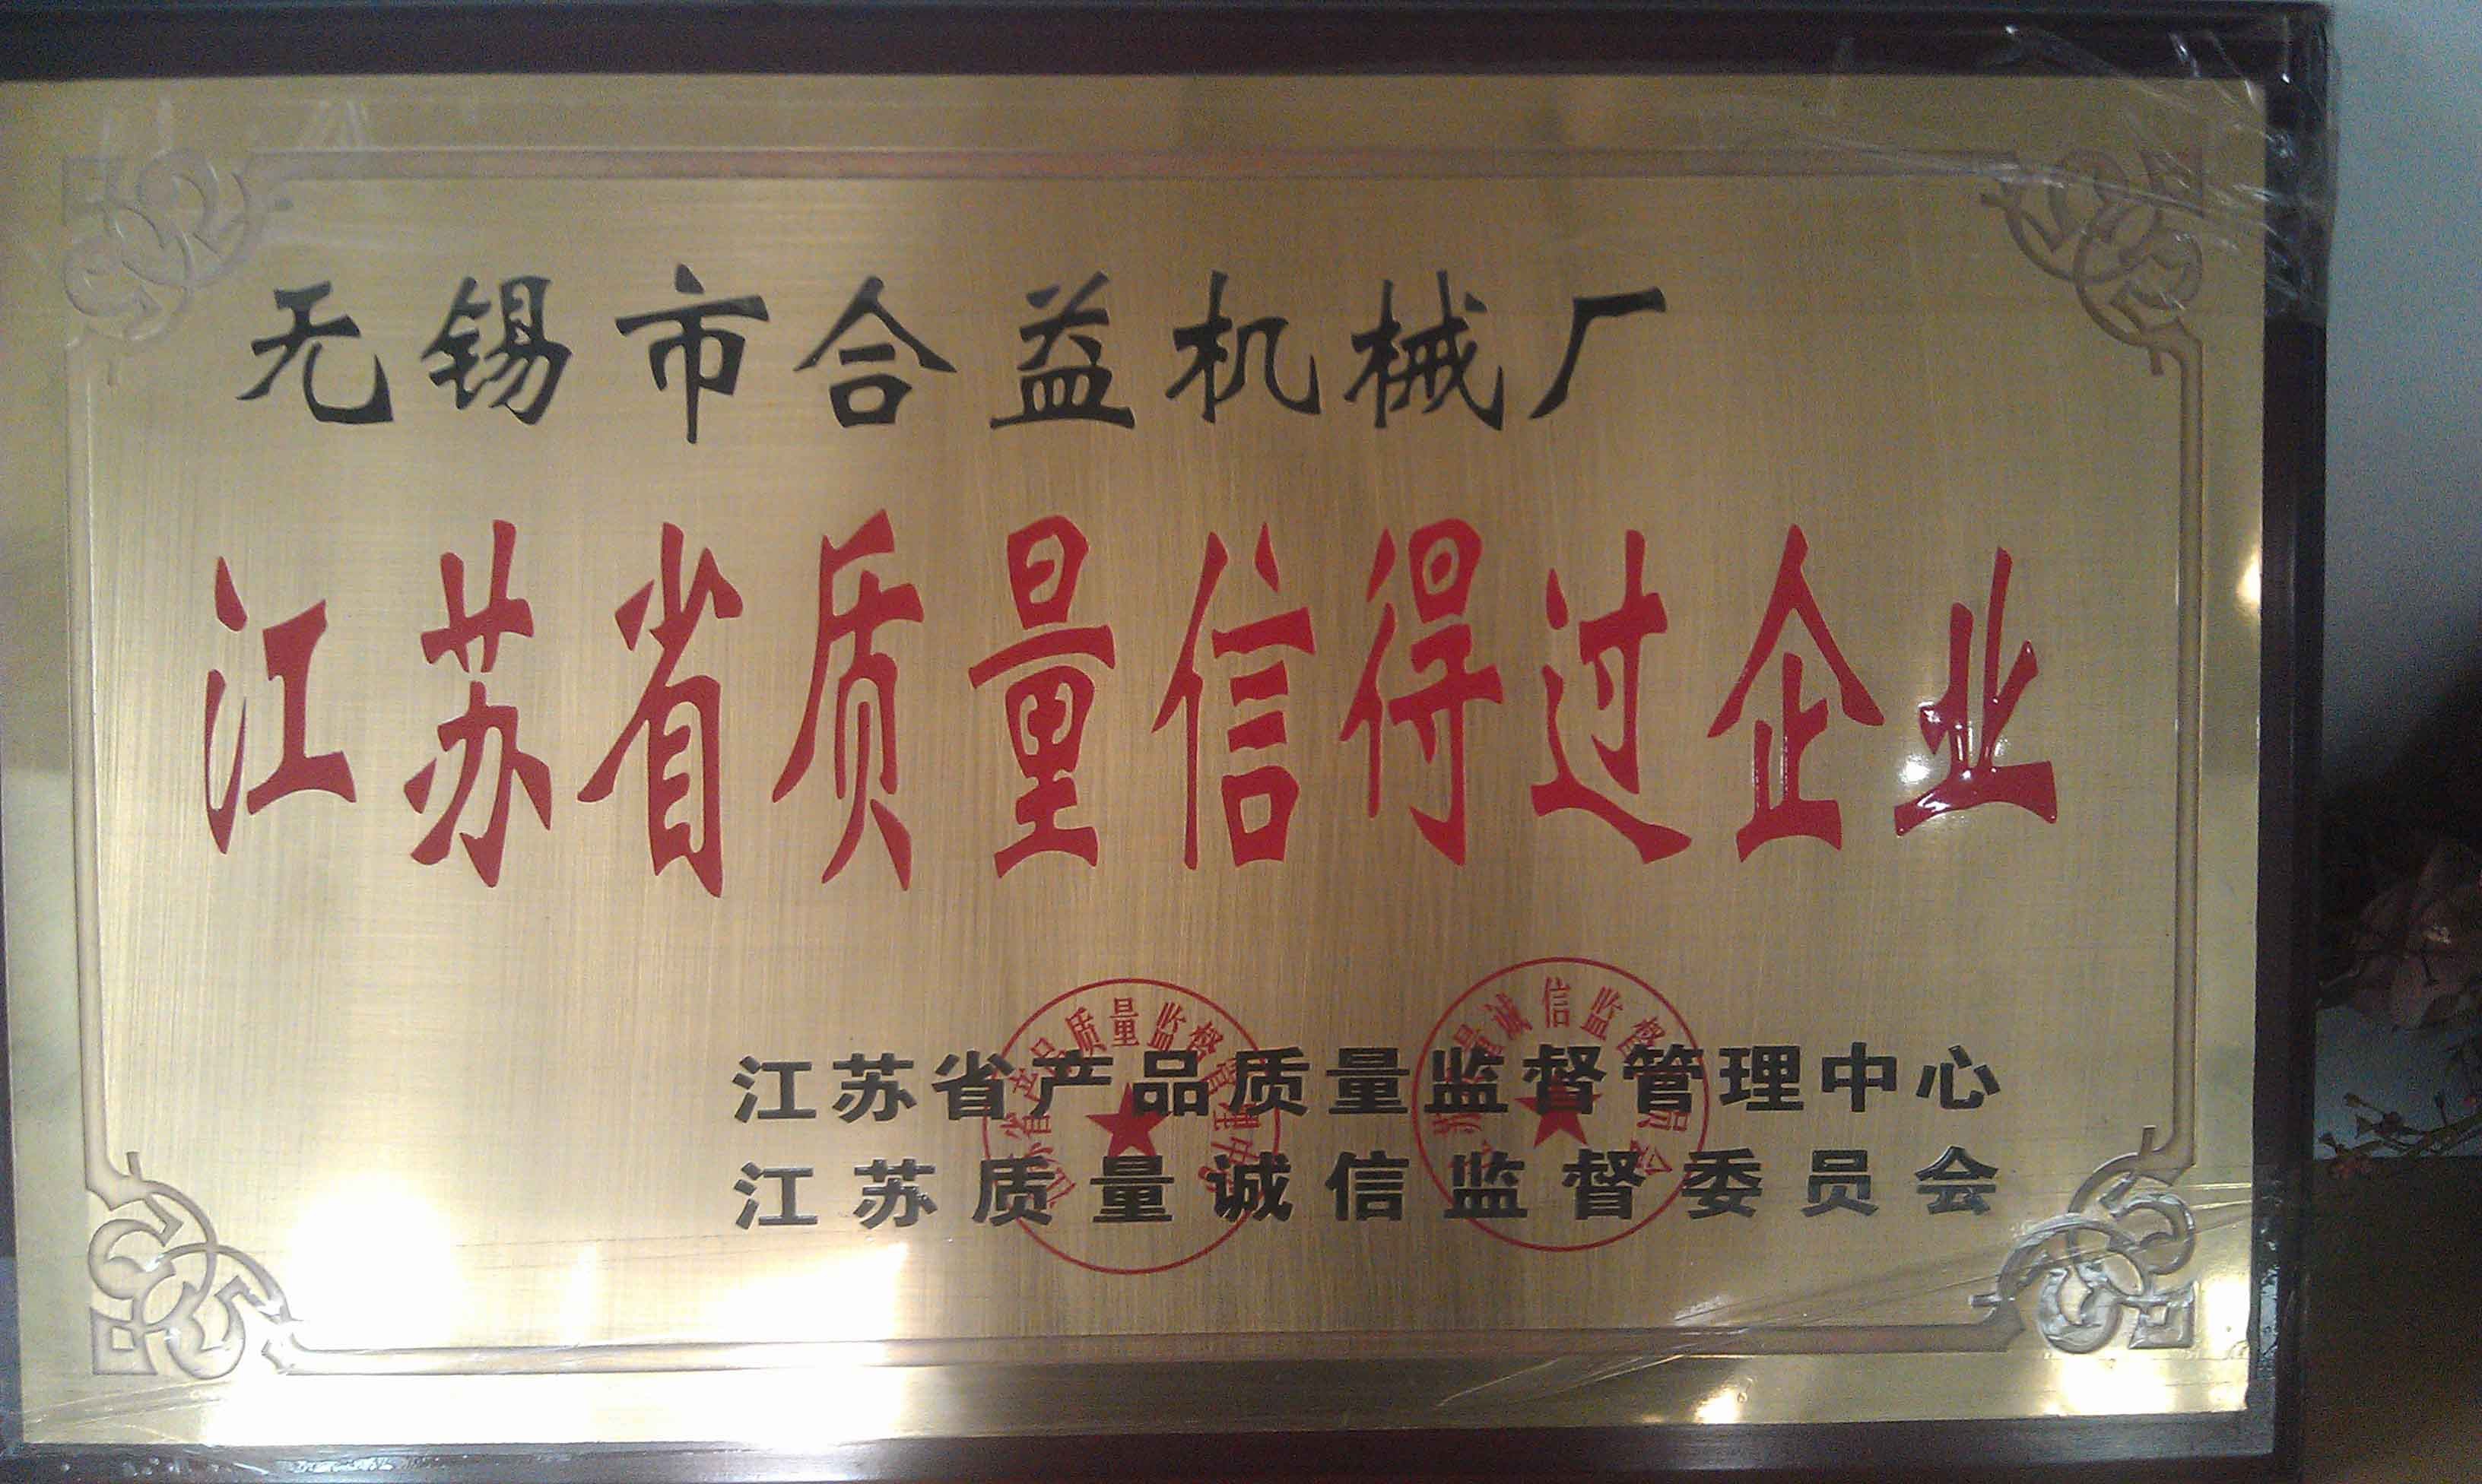 چین Jiangsu New Heyi Machinery Co., Ltd گواهینامه ها